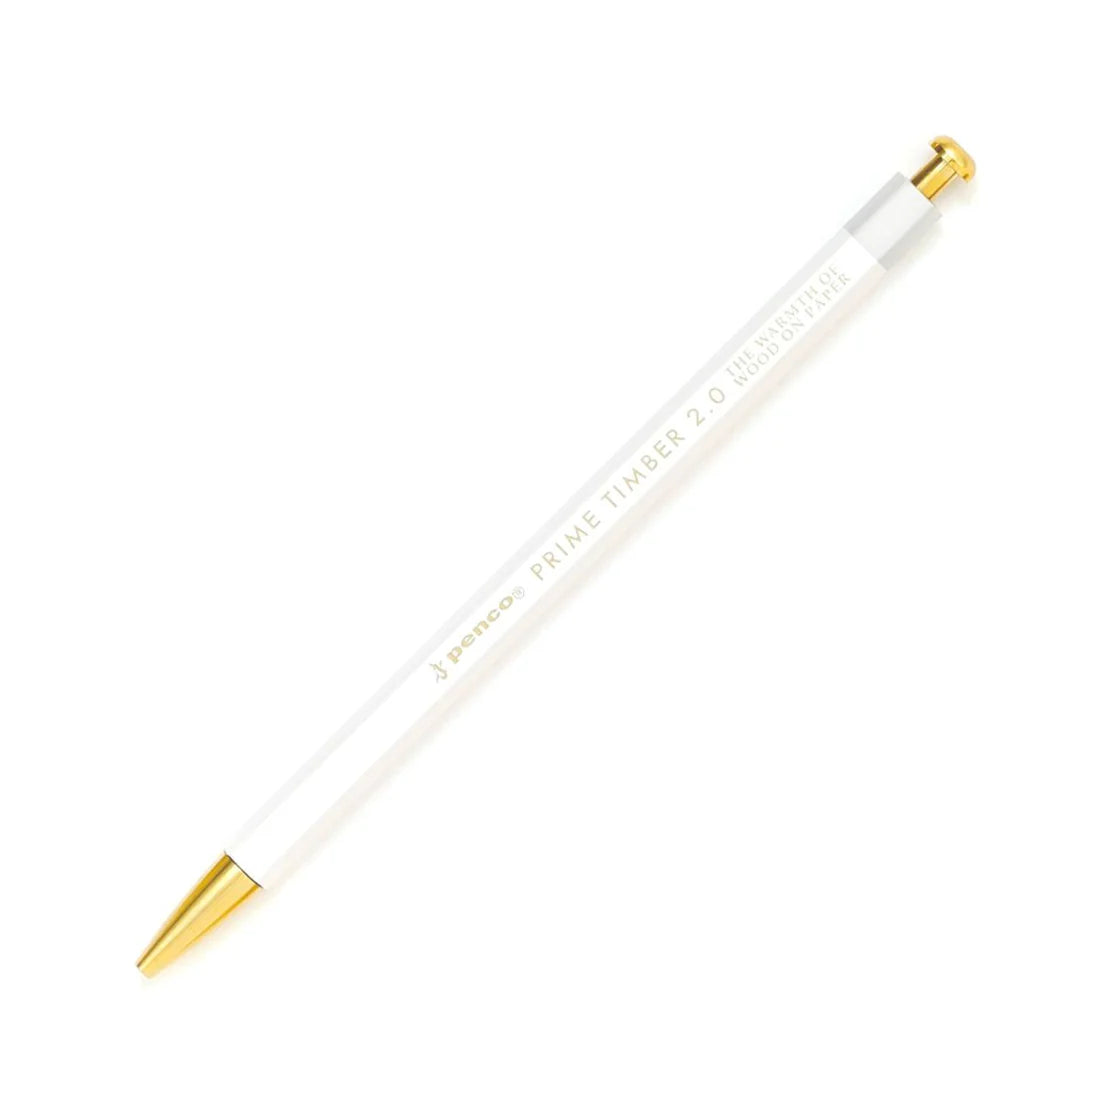 Kitaboshi Cedar Pencils (2B) : r/pencils